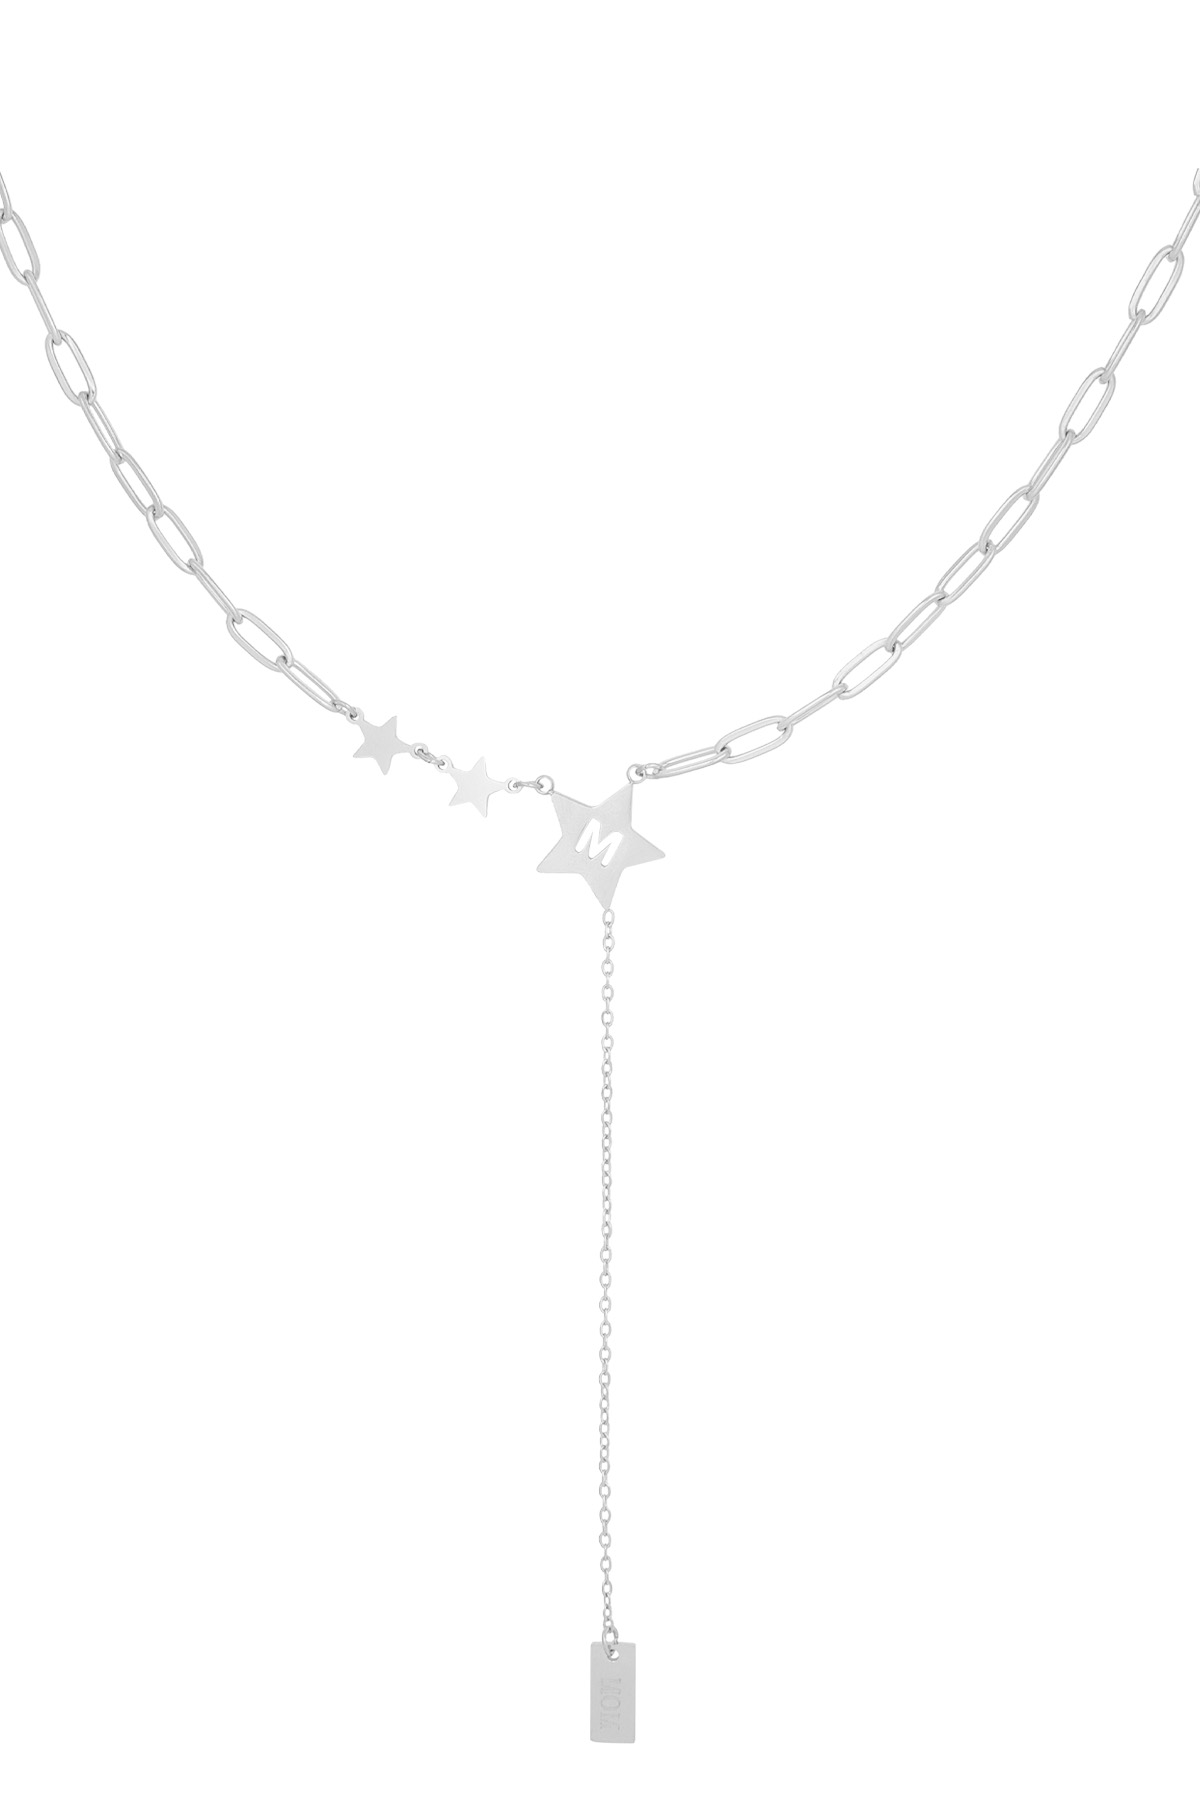 Necklace infinite grace - silver h5 